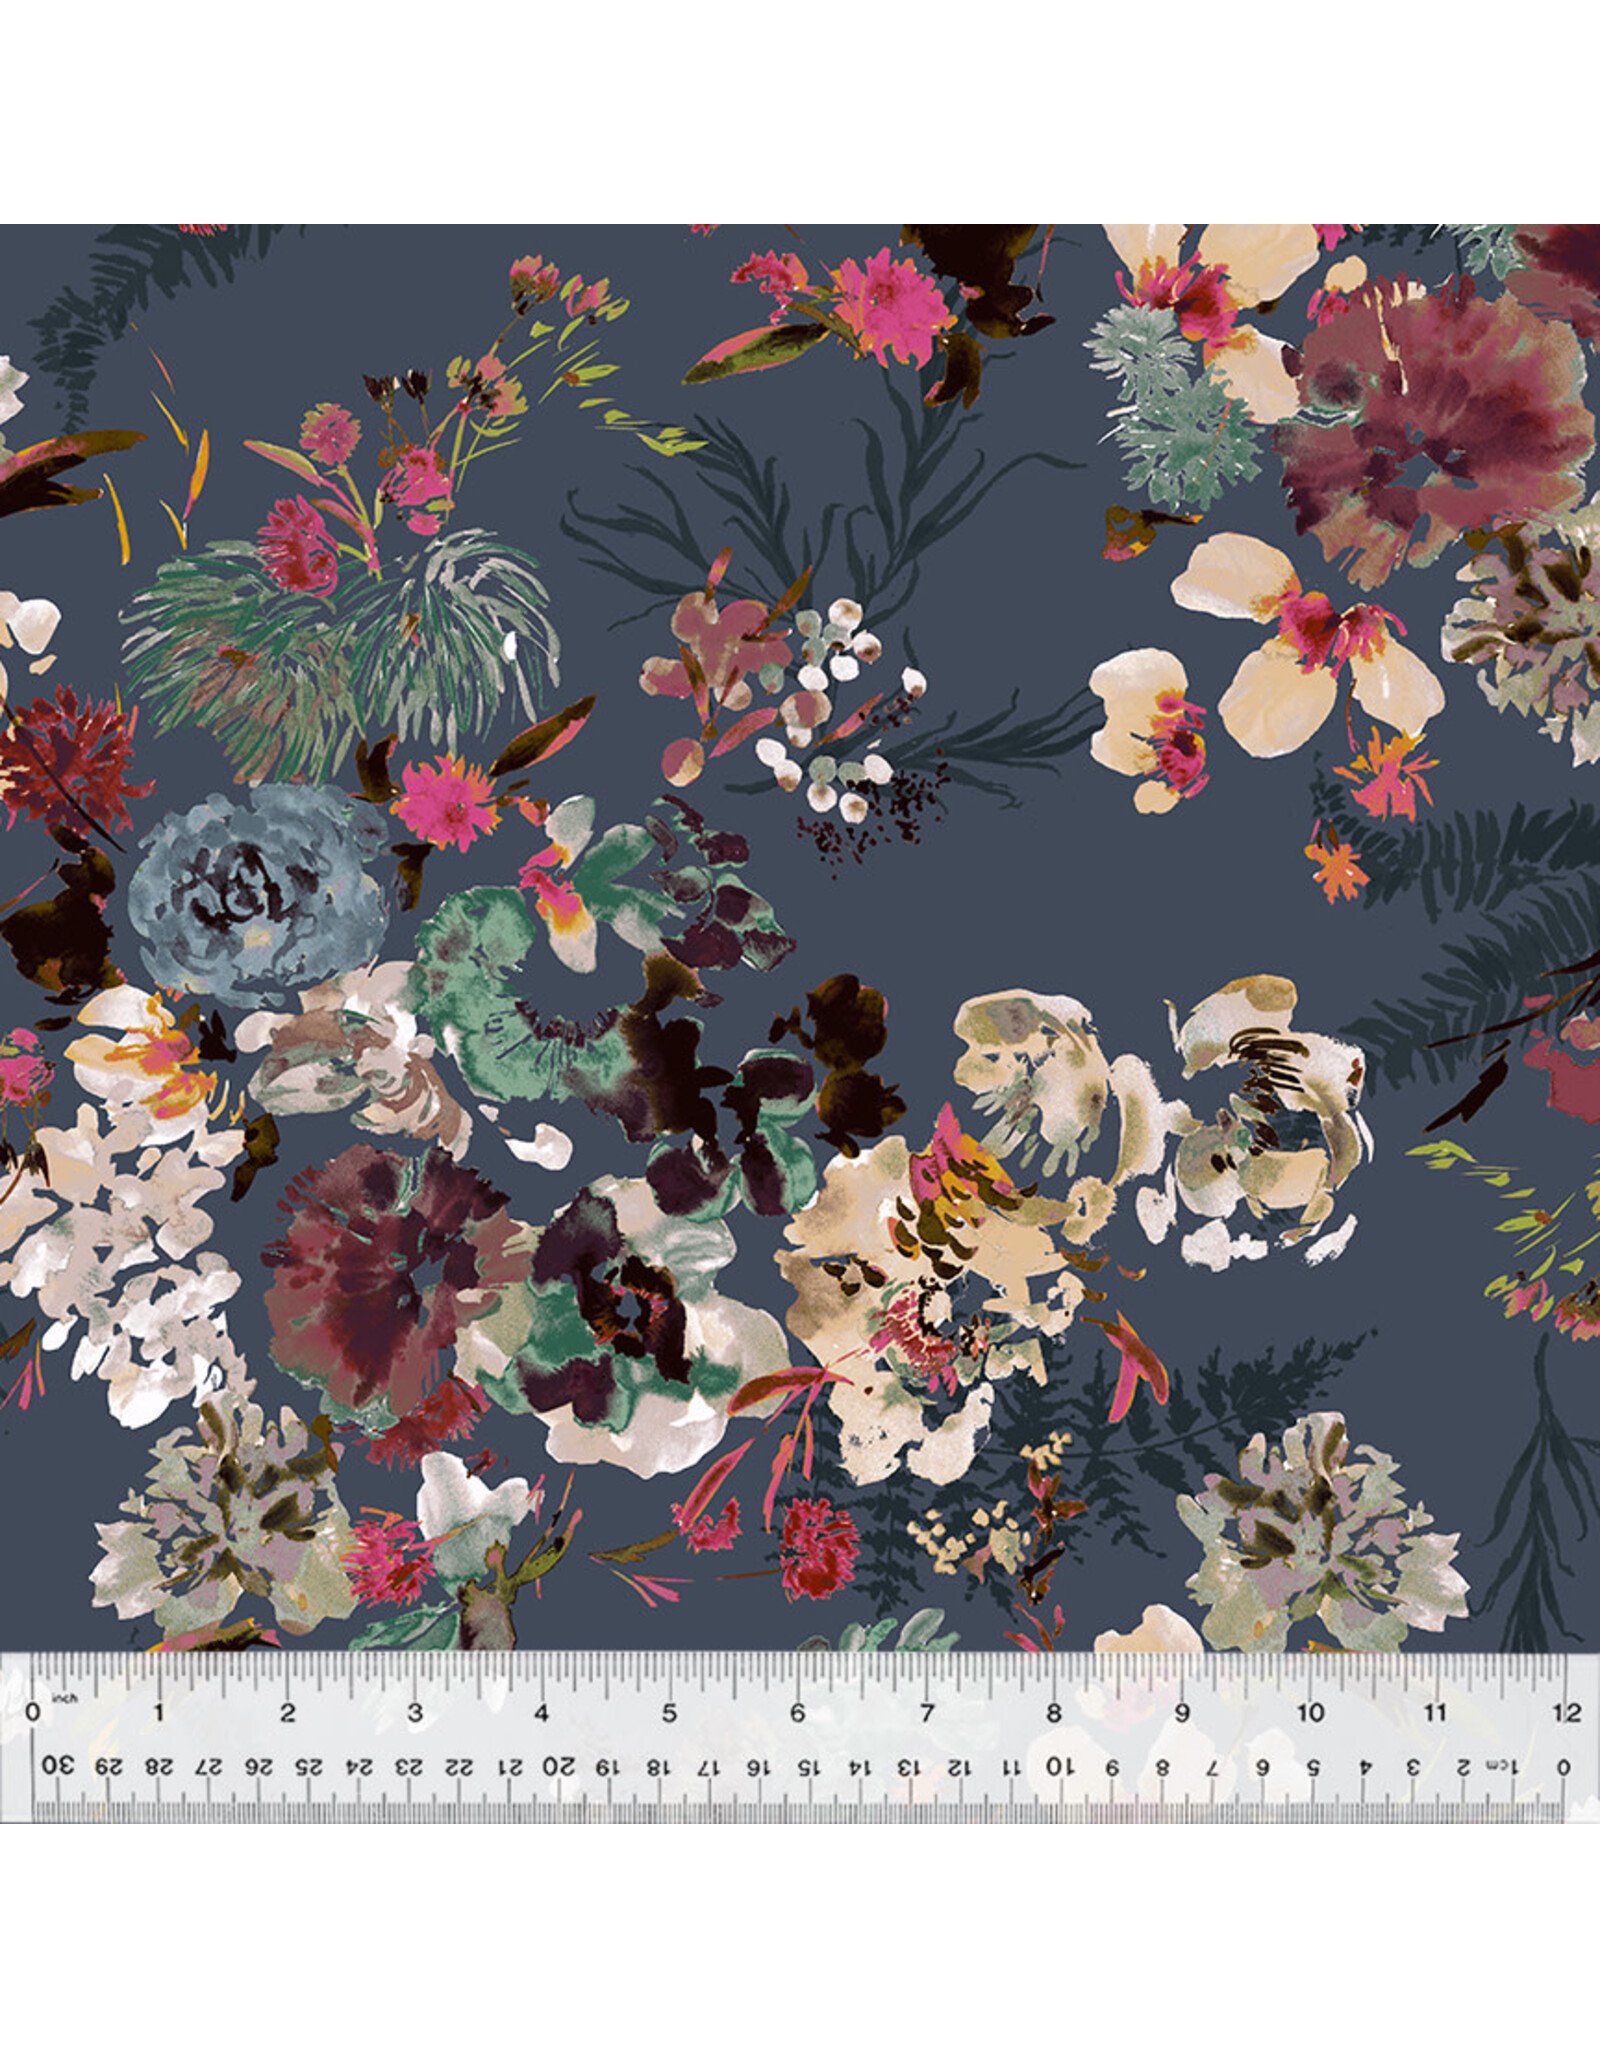 Kelly Ventura Perennial Jersey Knit, Flora in Slate, Fabric Half-Yards